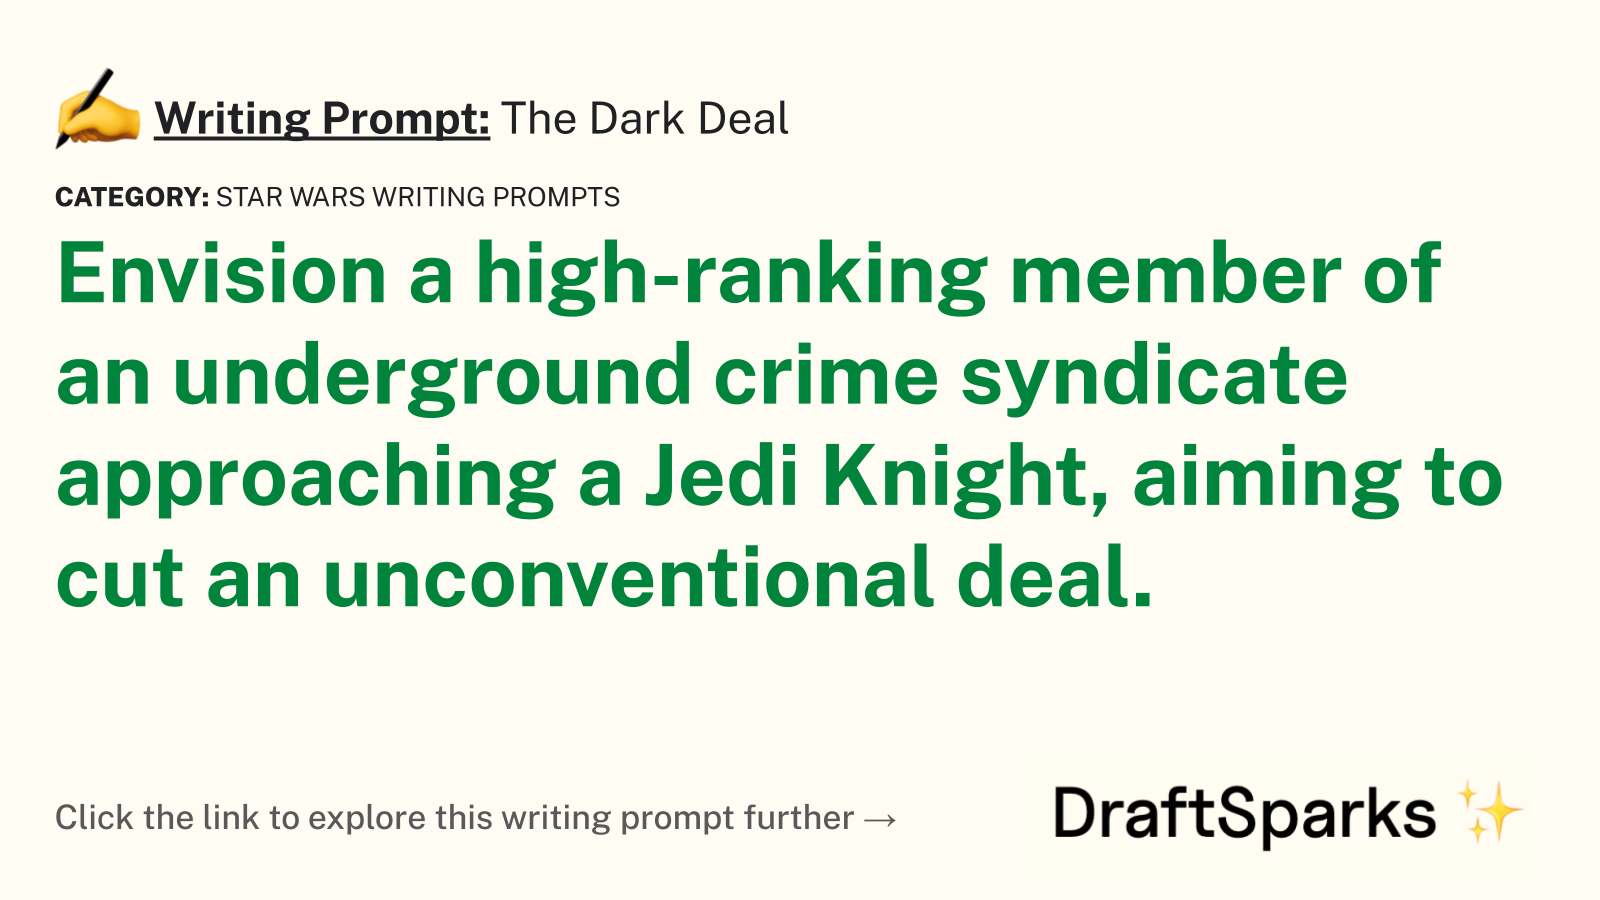 The Dark Deal